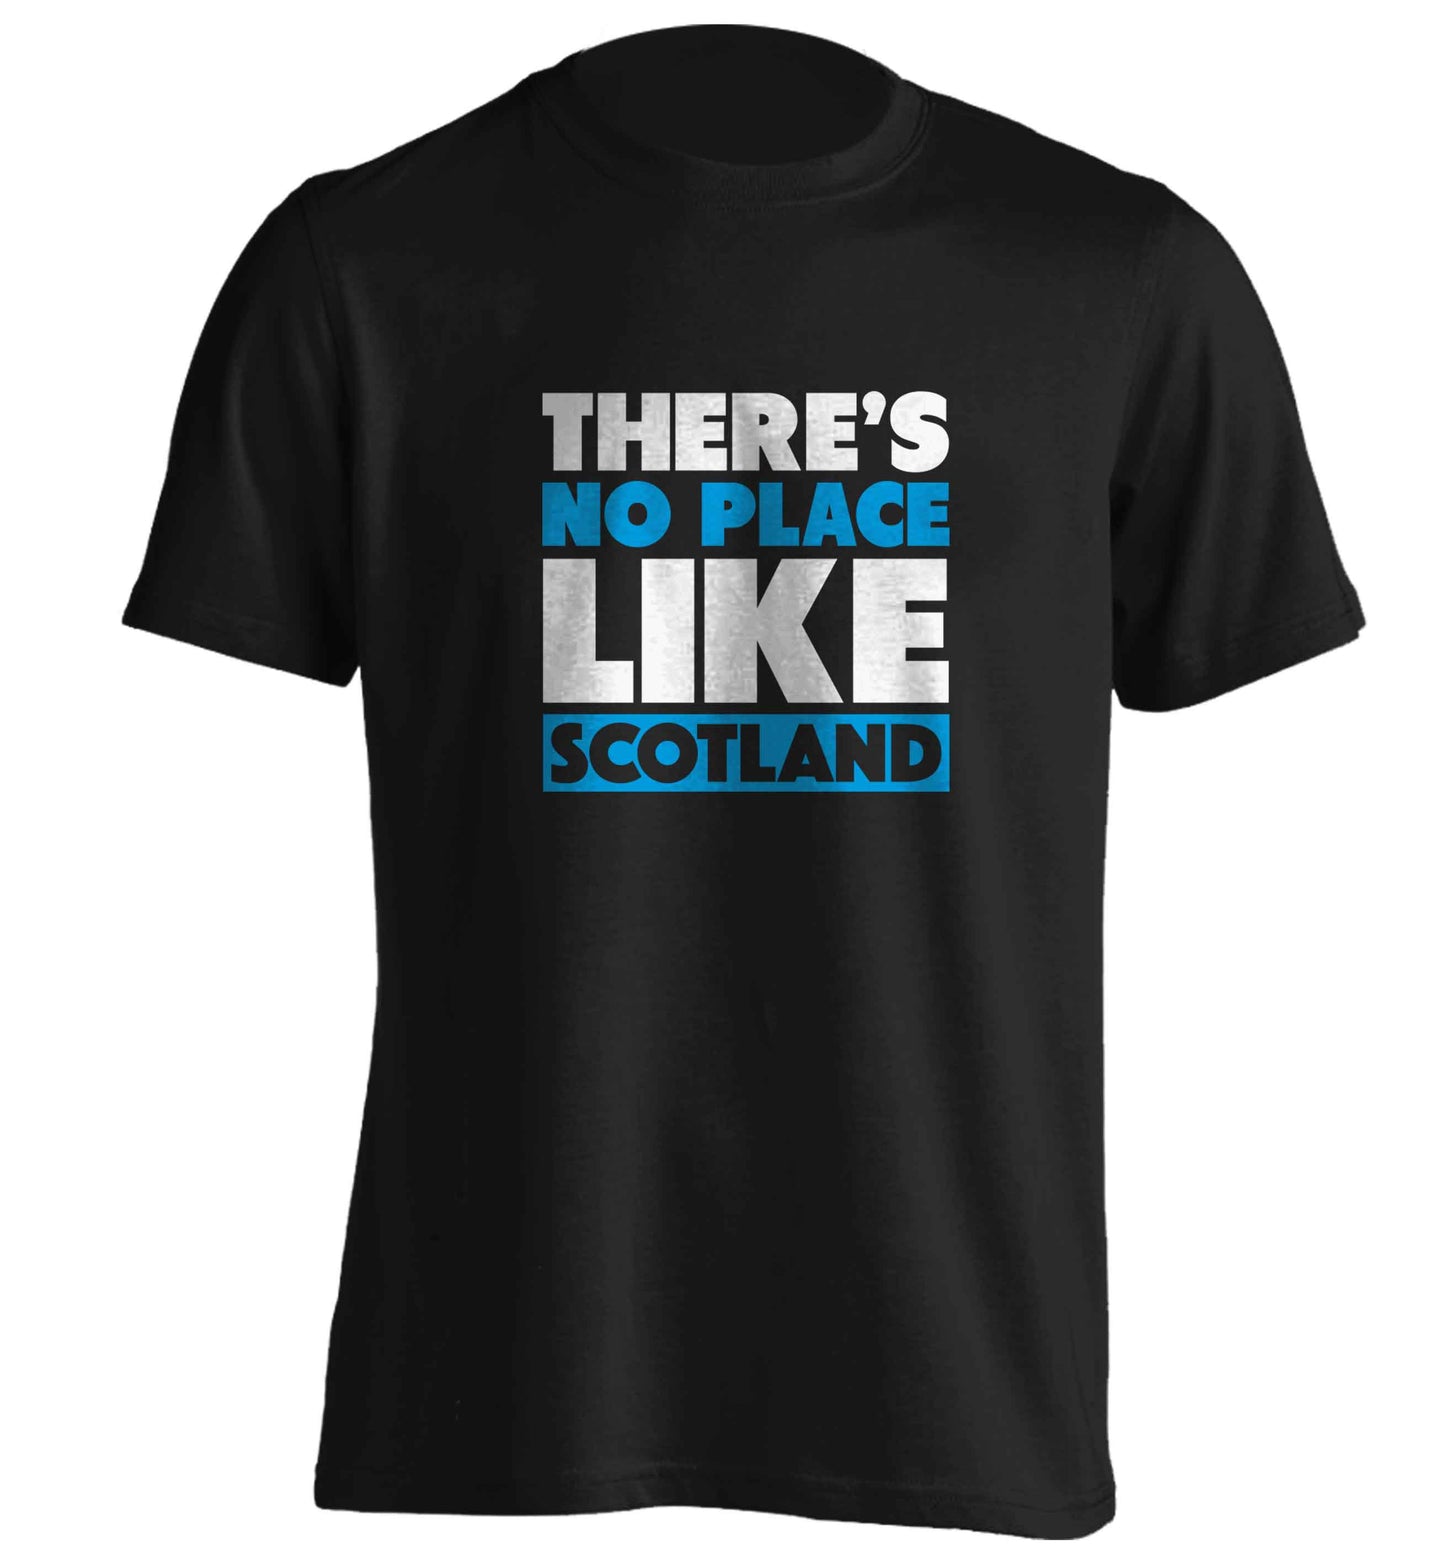 There's no place like Scotland adults unisex black Tshirt 2XL